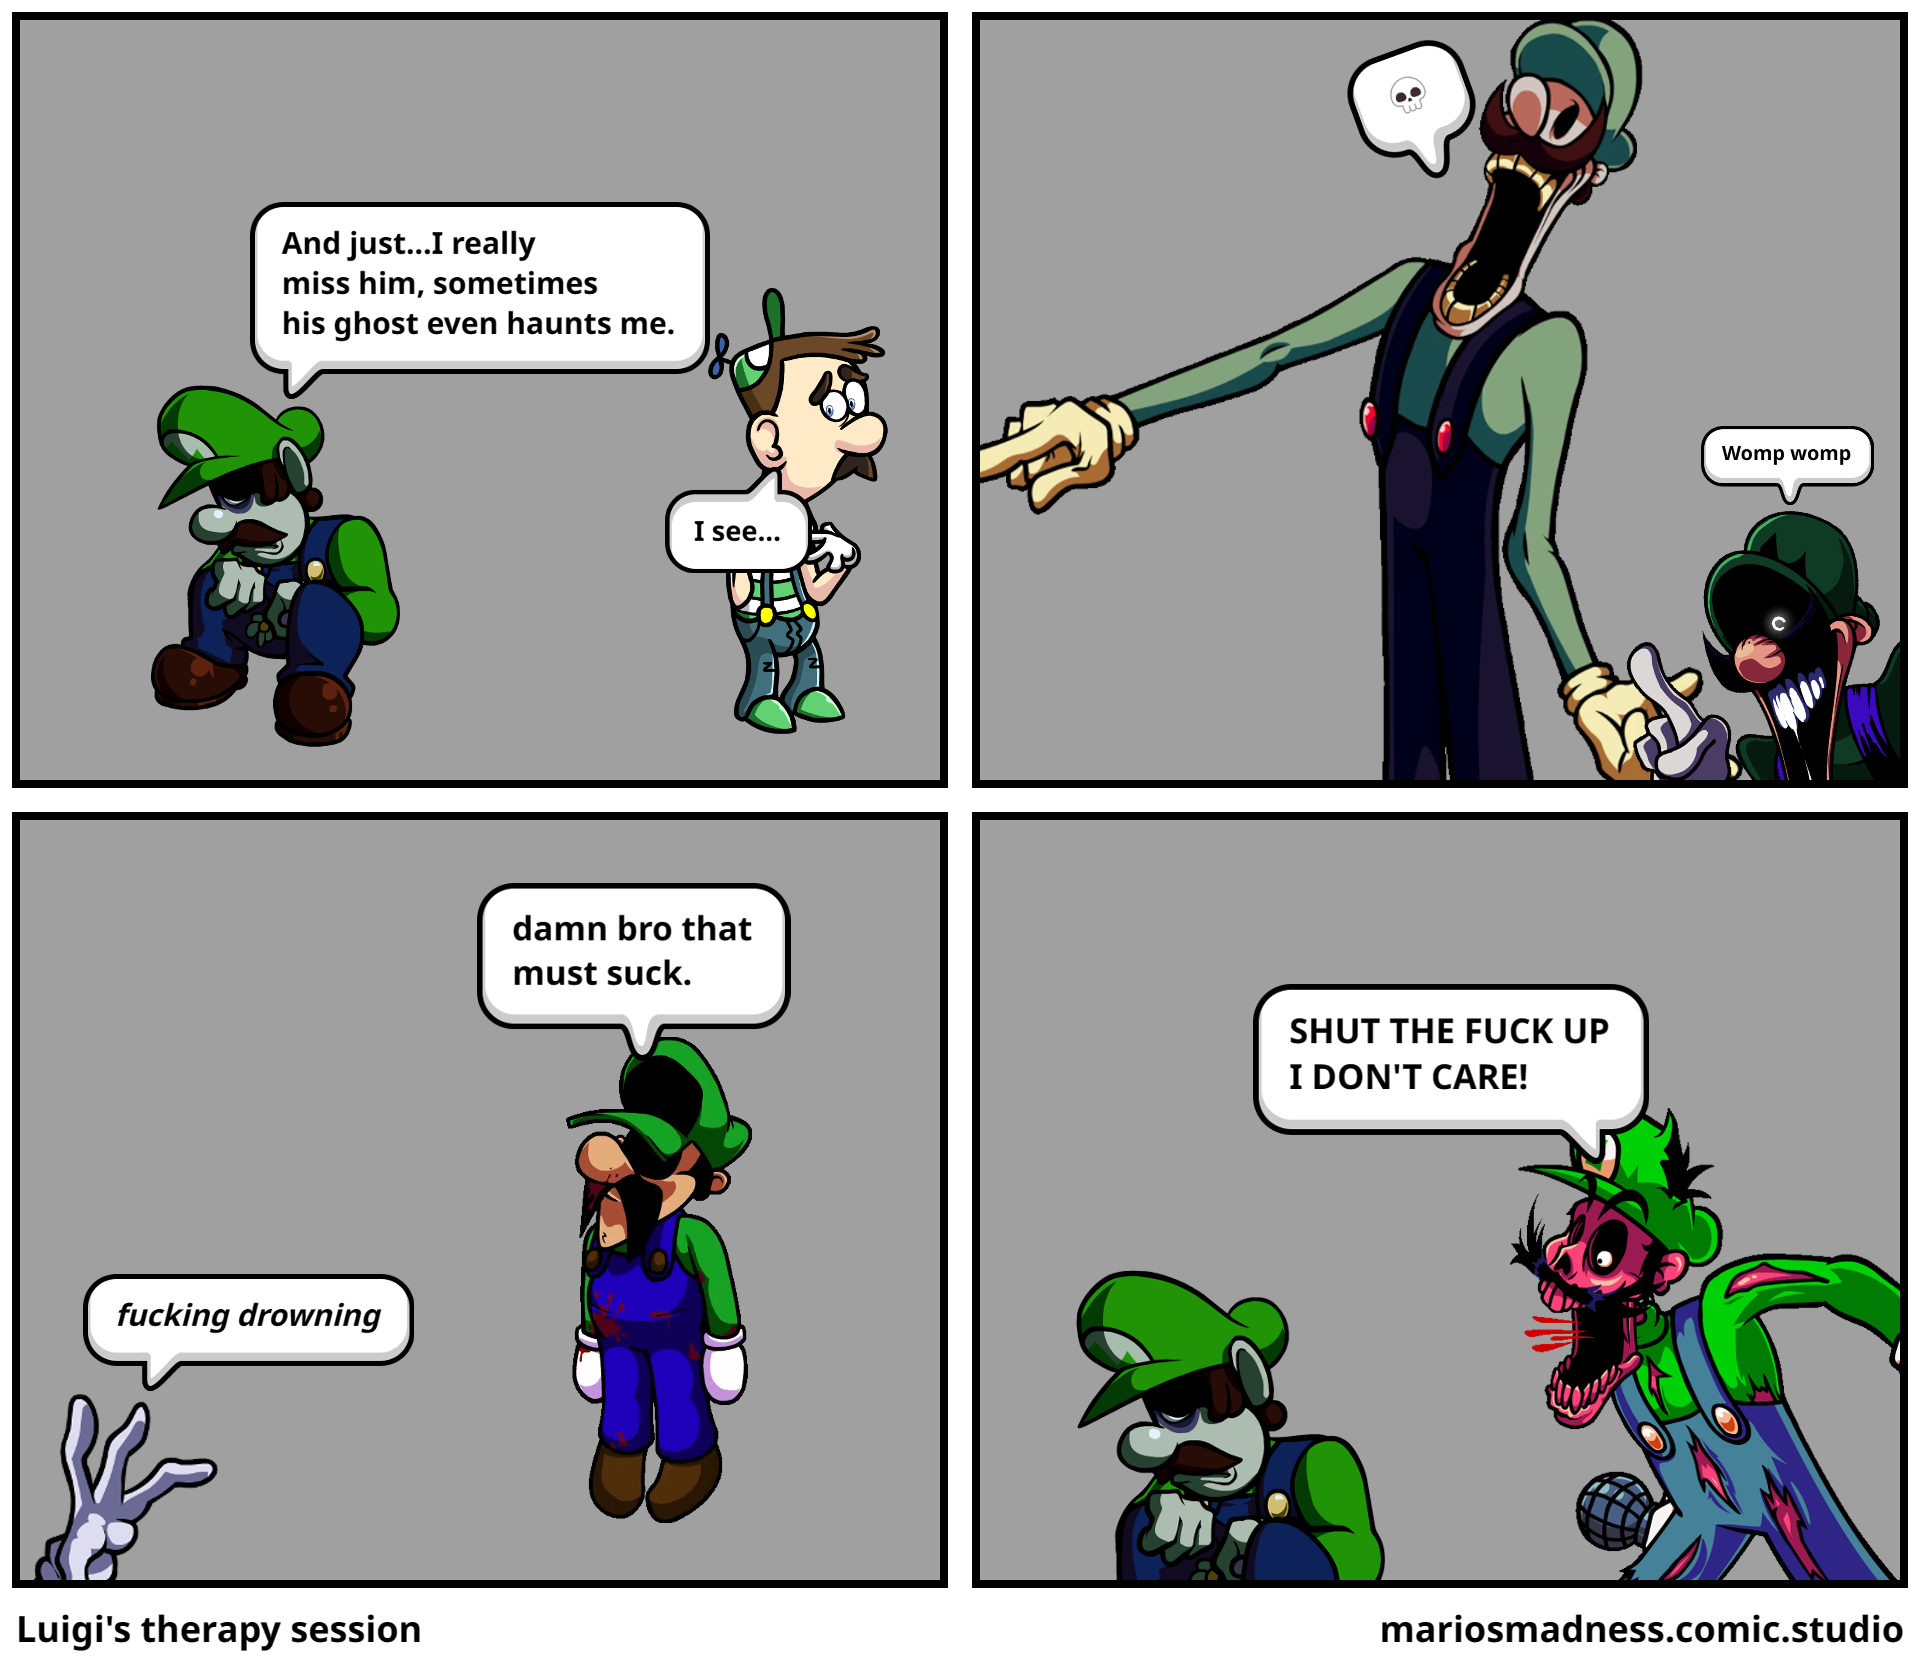 Luigi's therapy session